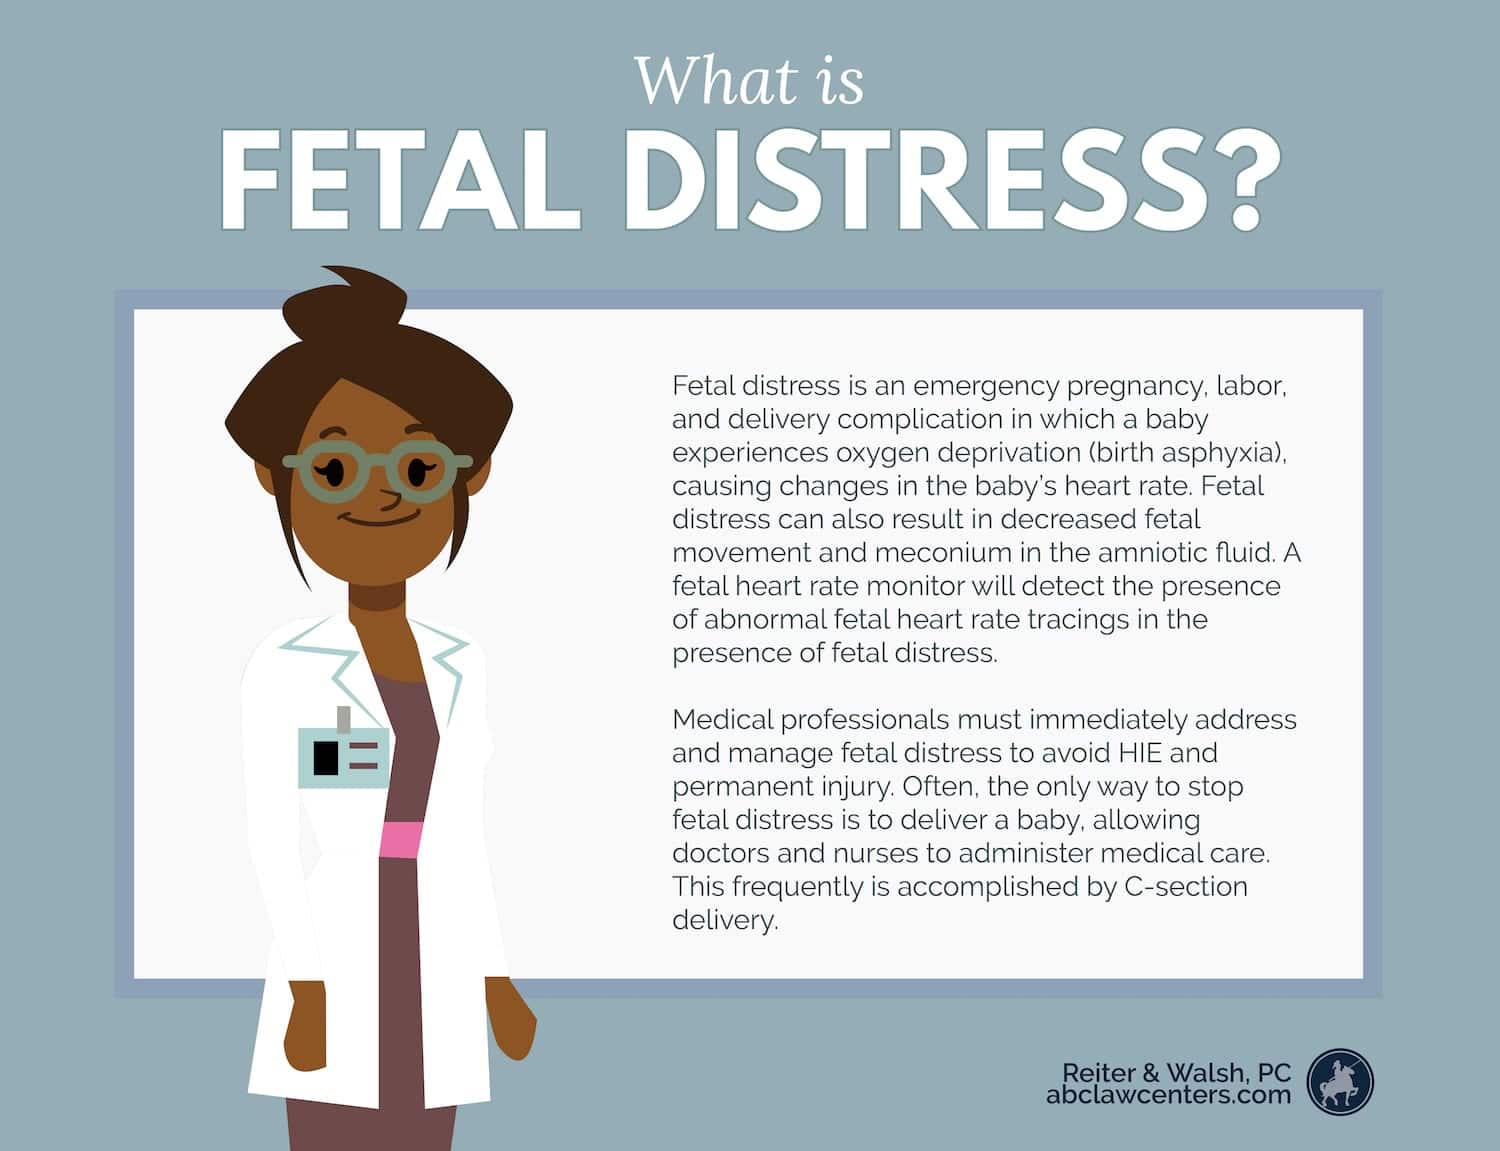 What is Fetal Distress?